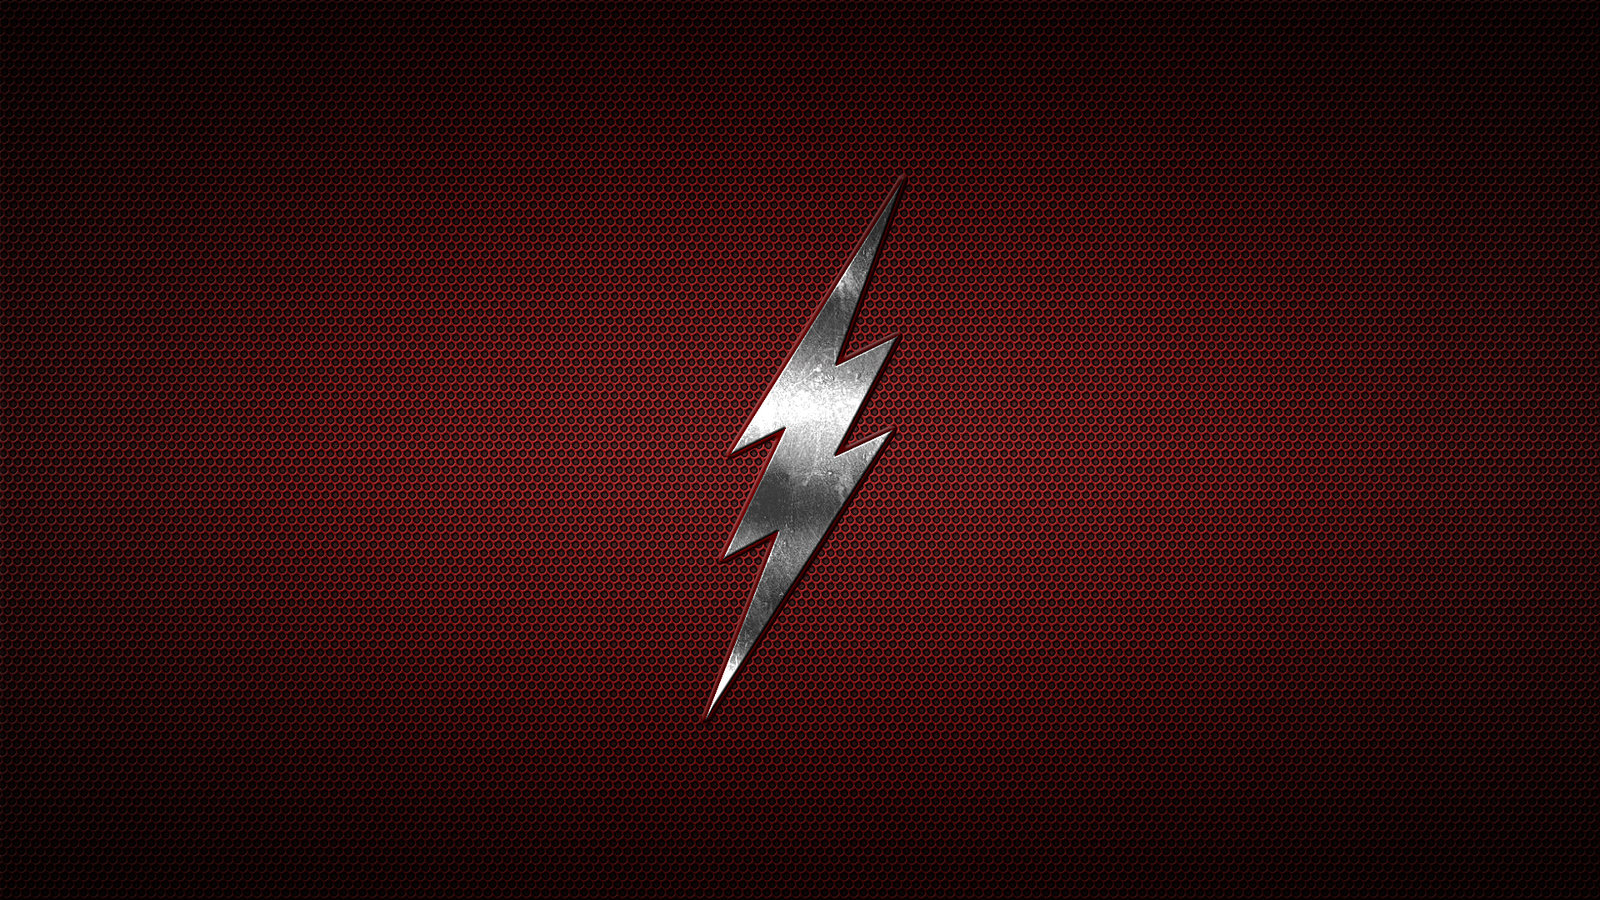 rePin image: The Flash Logo 19 Wallpaper Hd on Pinterest